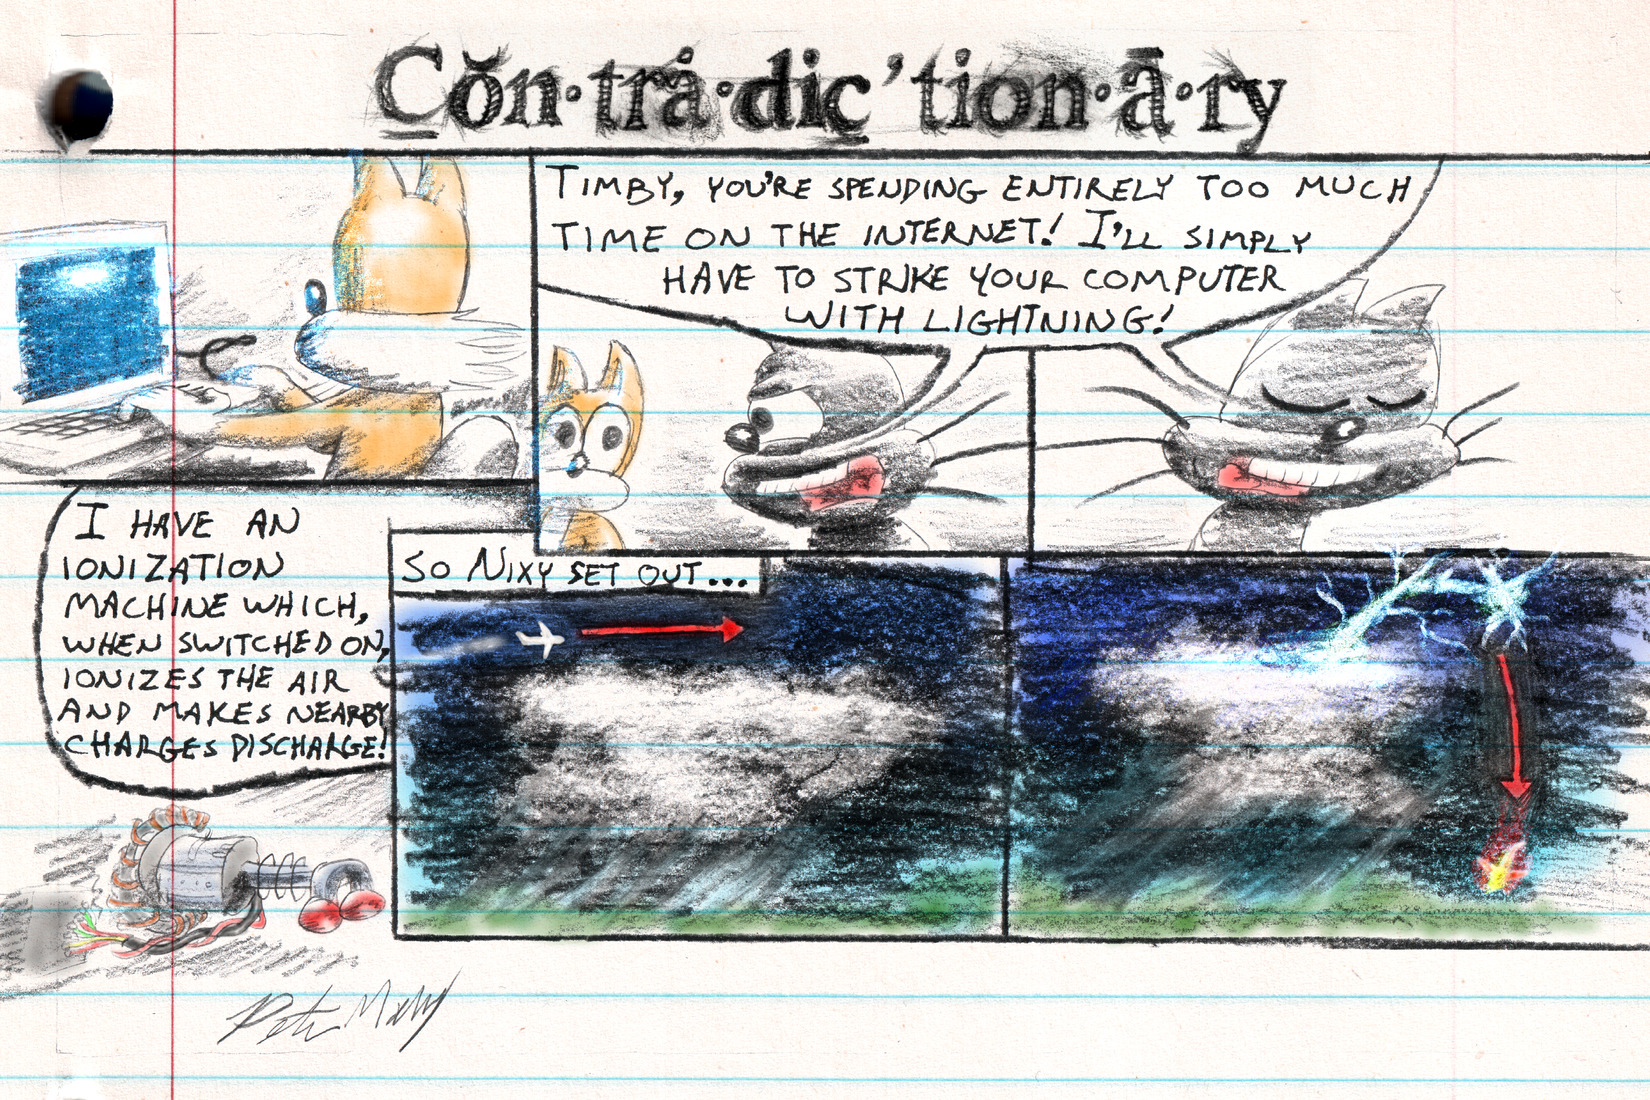 Contradictionary – Ionization Machine